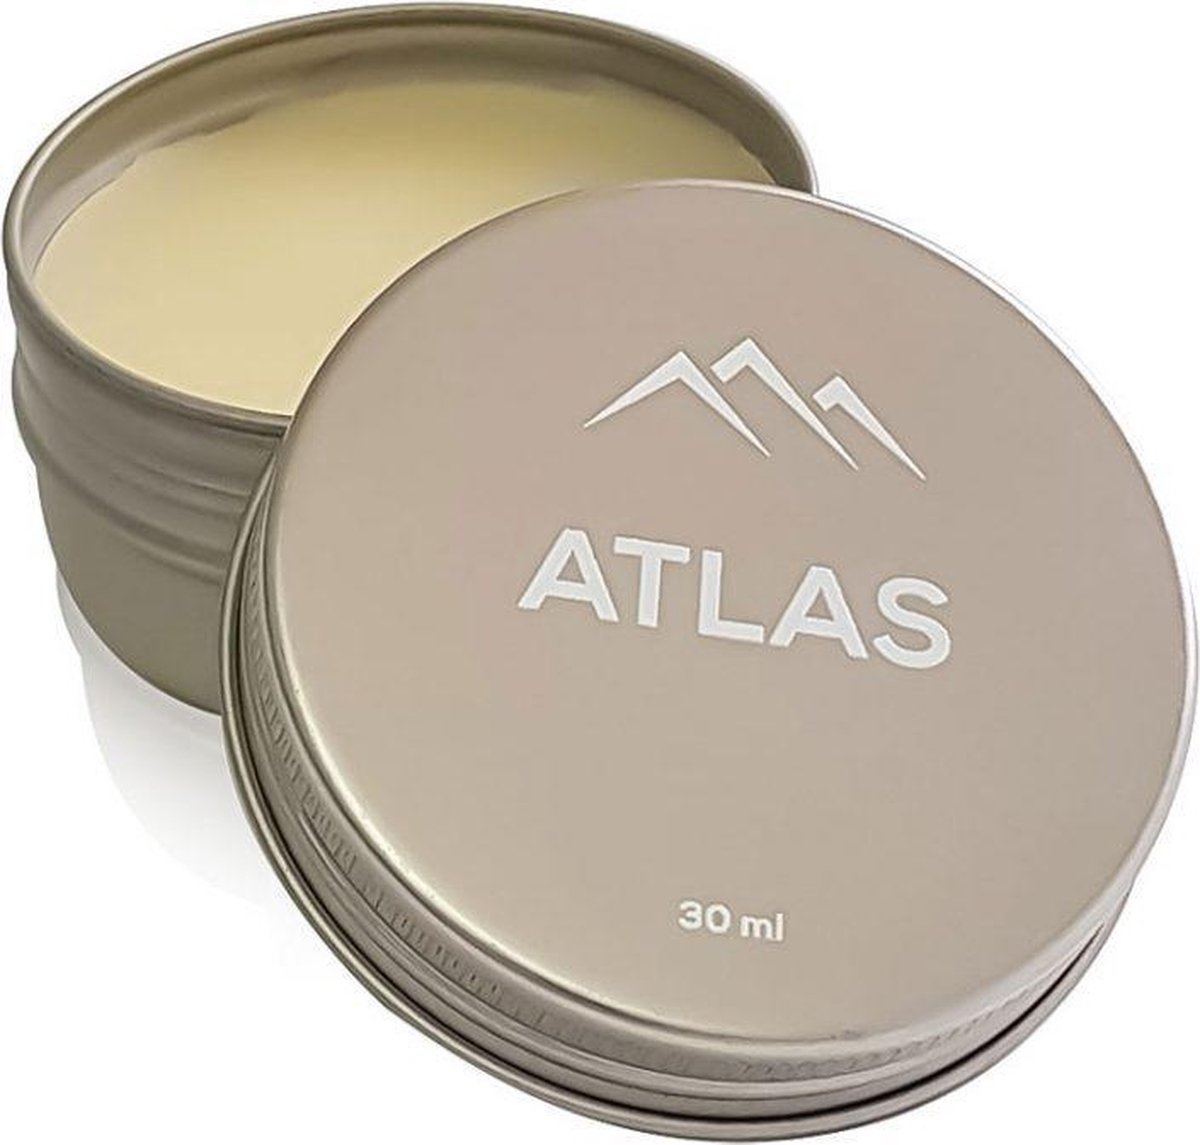 Atlas Solid Cologne - Eau De Cologne - Solide Parfum Voor Heren - Wax Basis